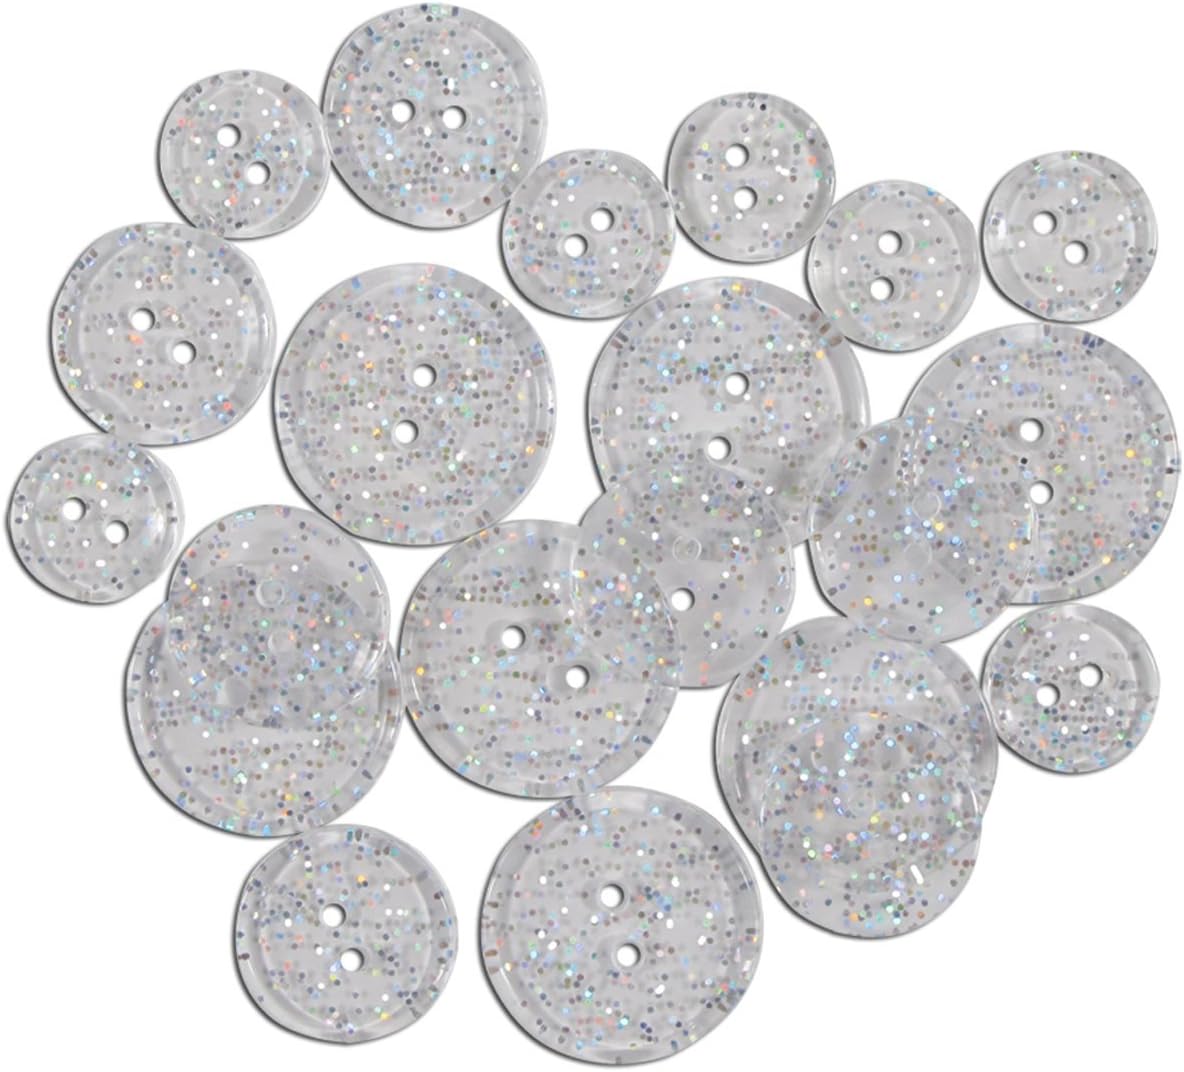 Favorite Findings Glitter Buttons - Clear Transparent 20/Pkg